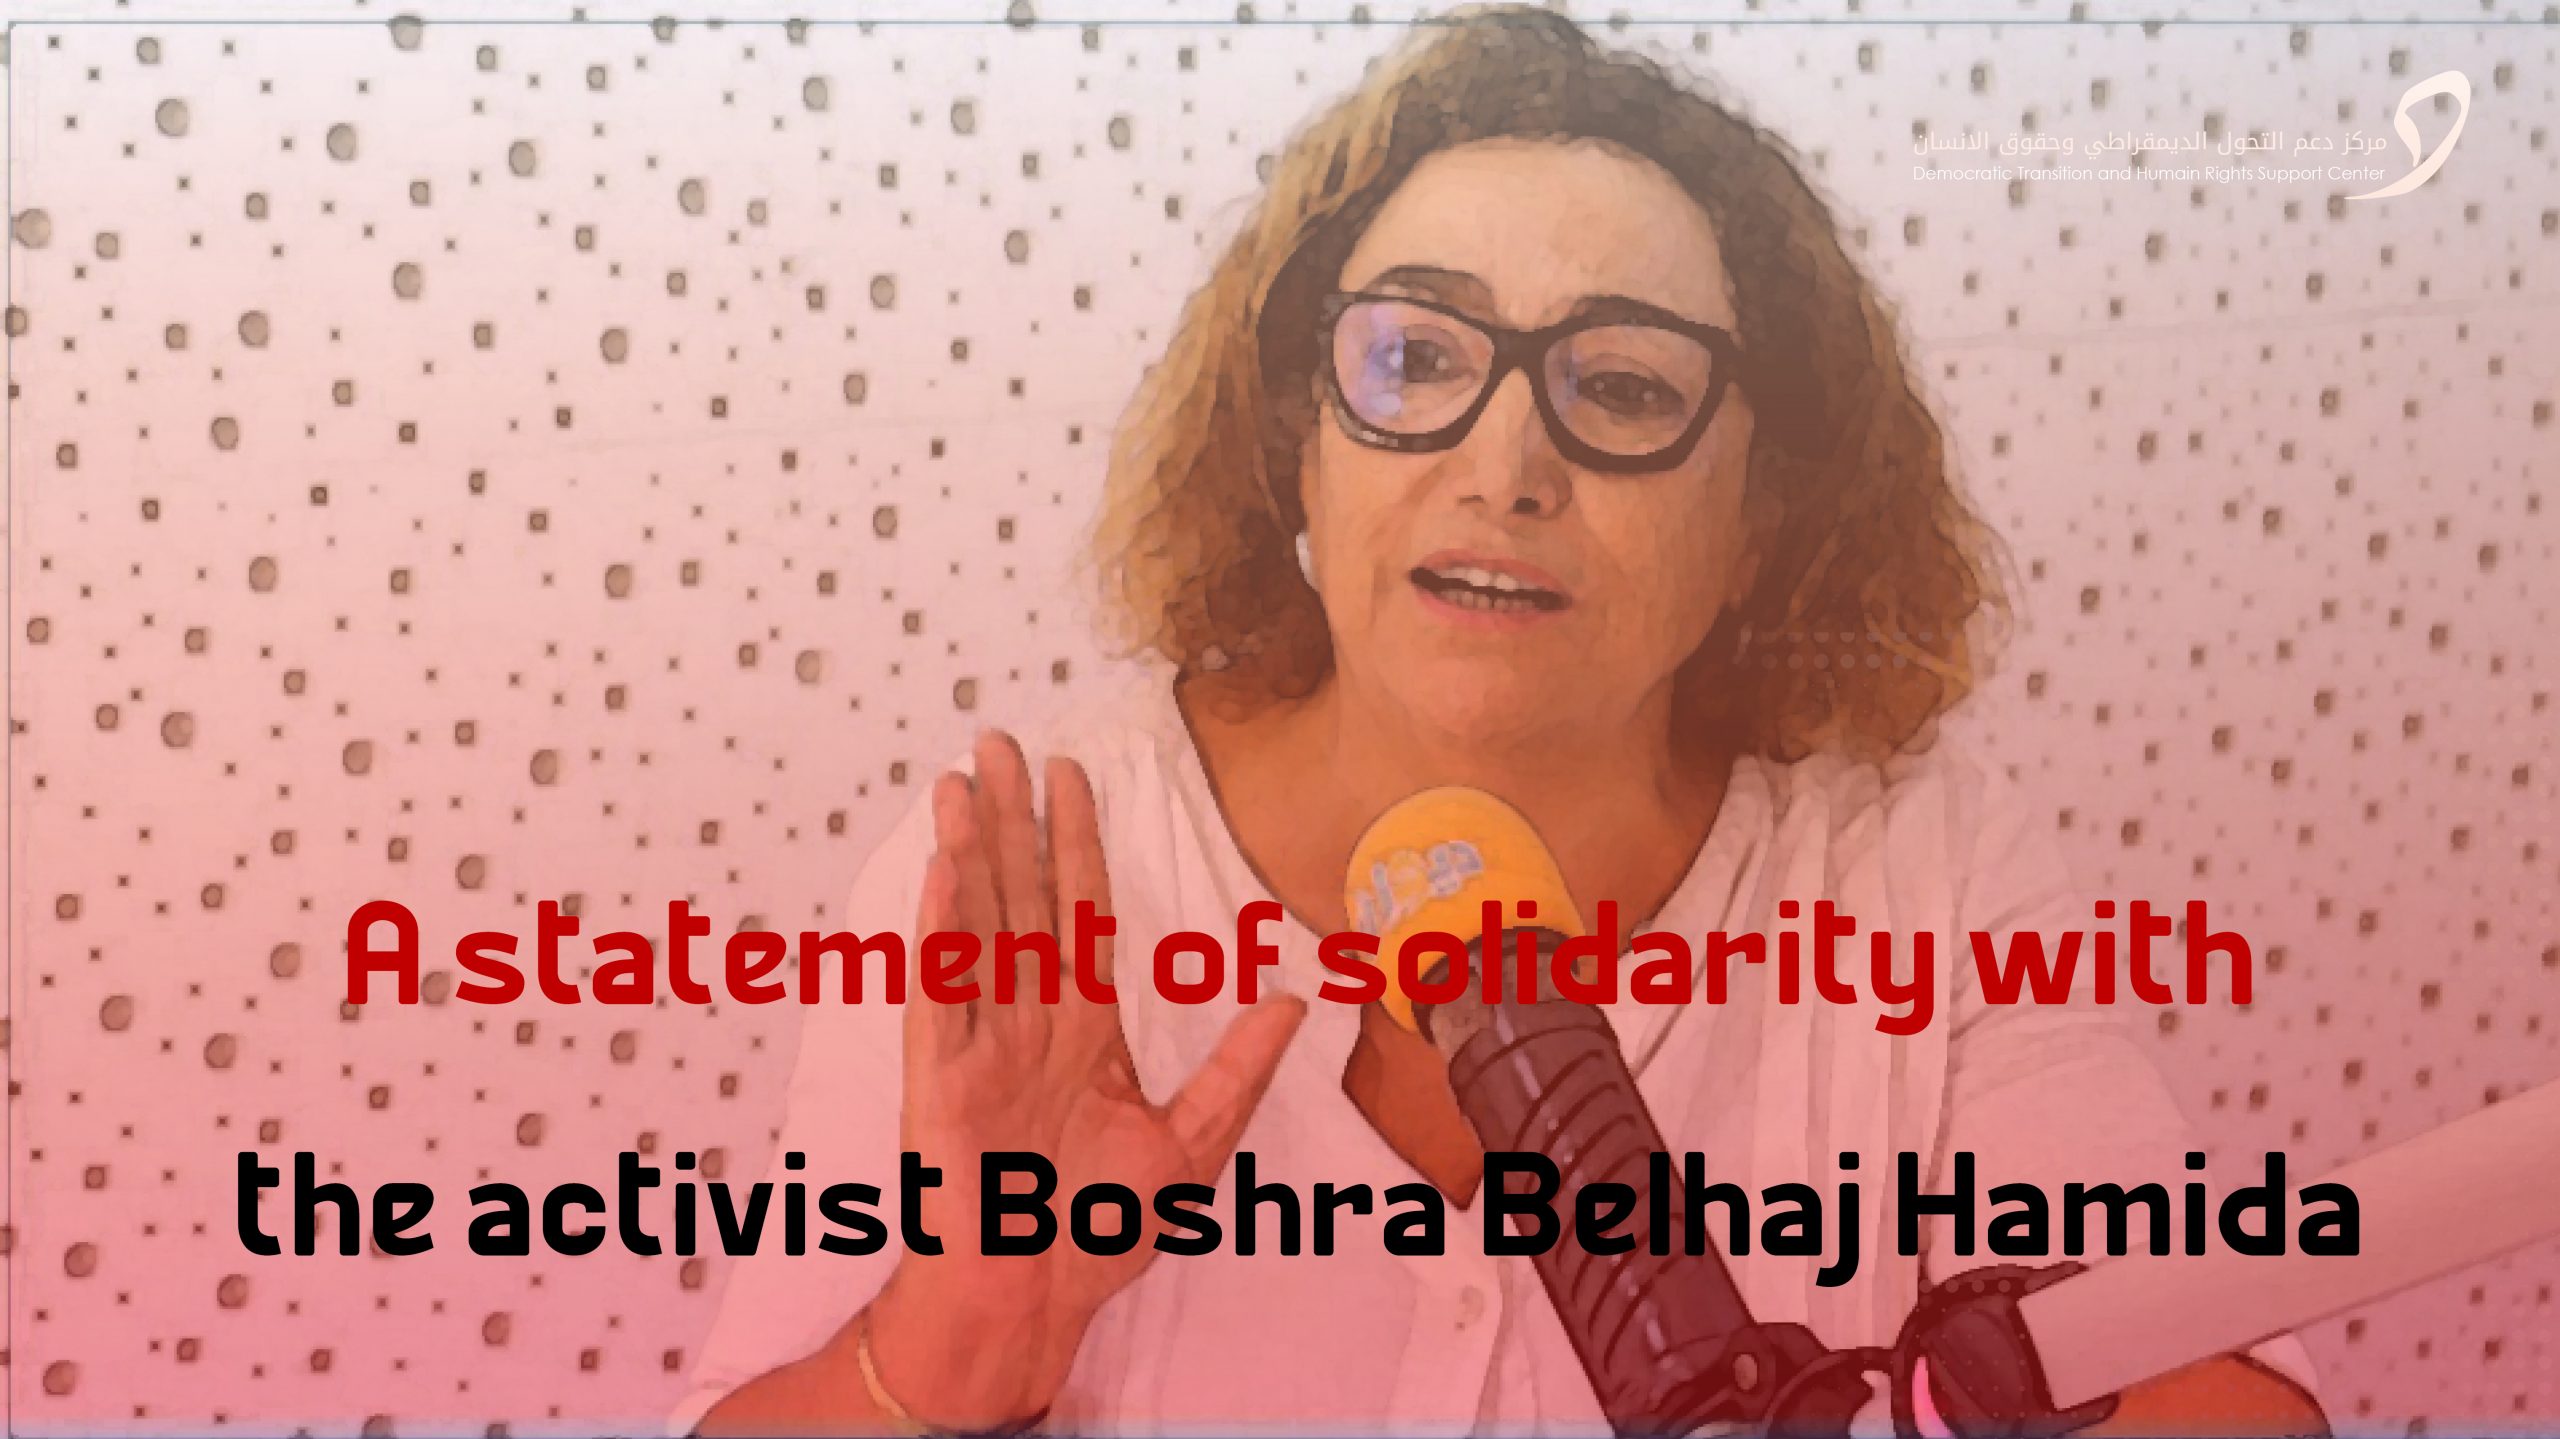 A statement of solidarity with the activist Boshra Belhaj Hamida